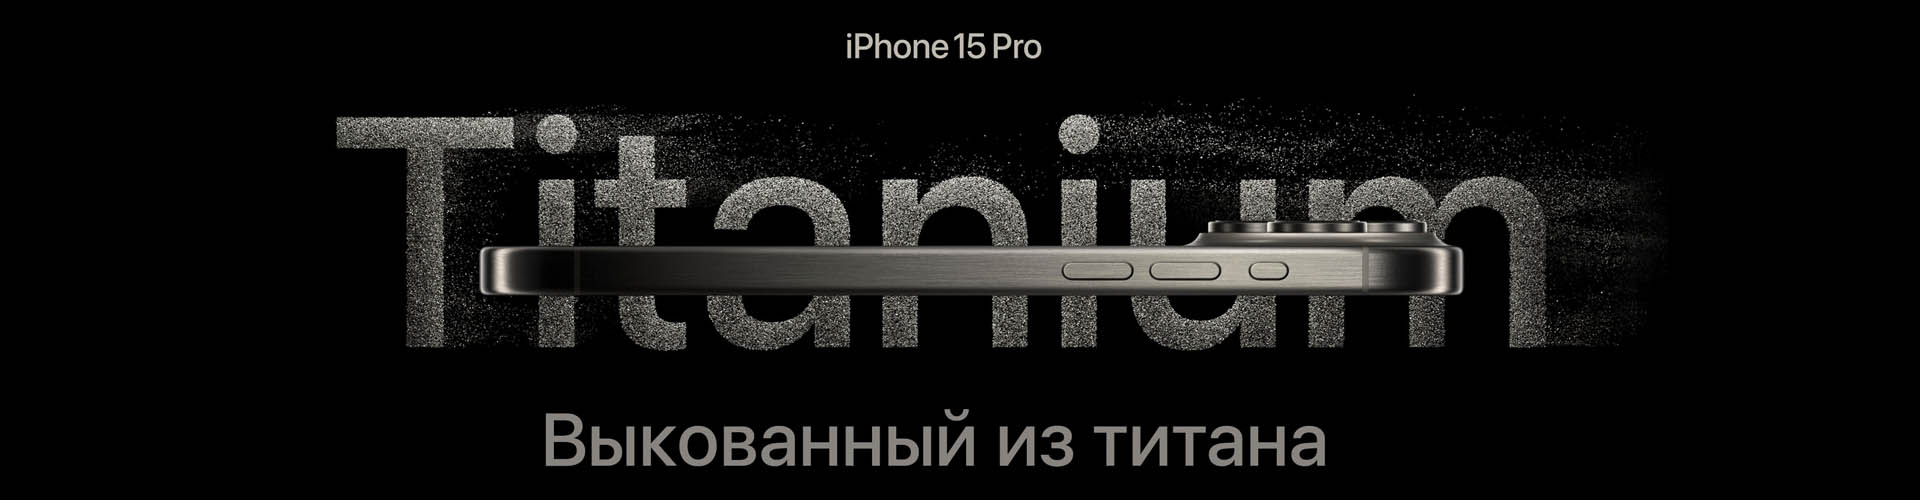 IPhone 14